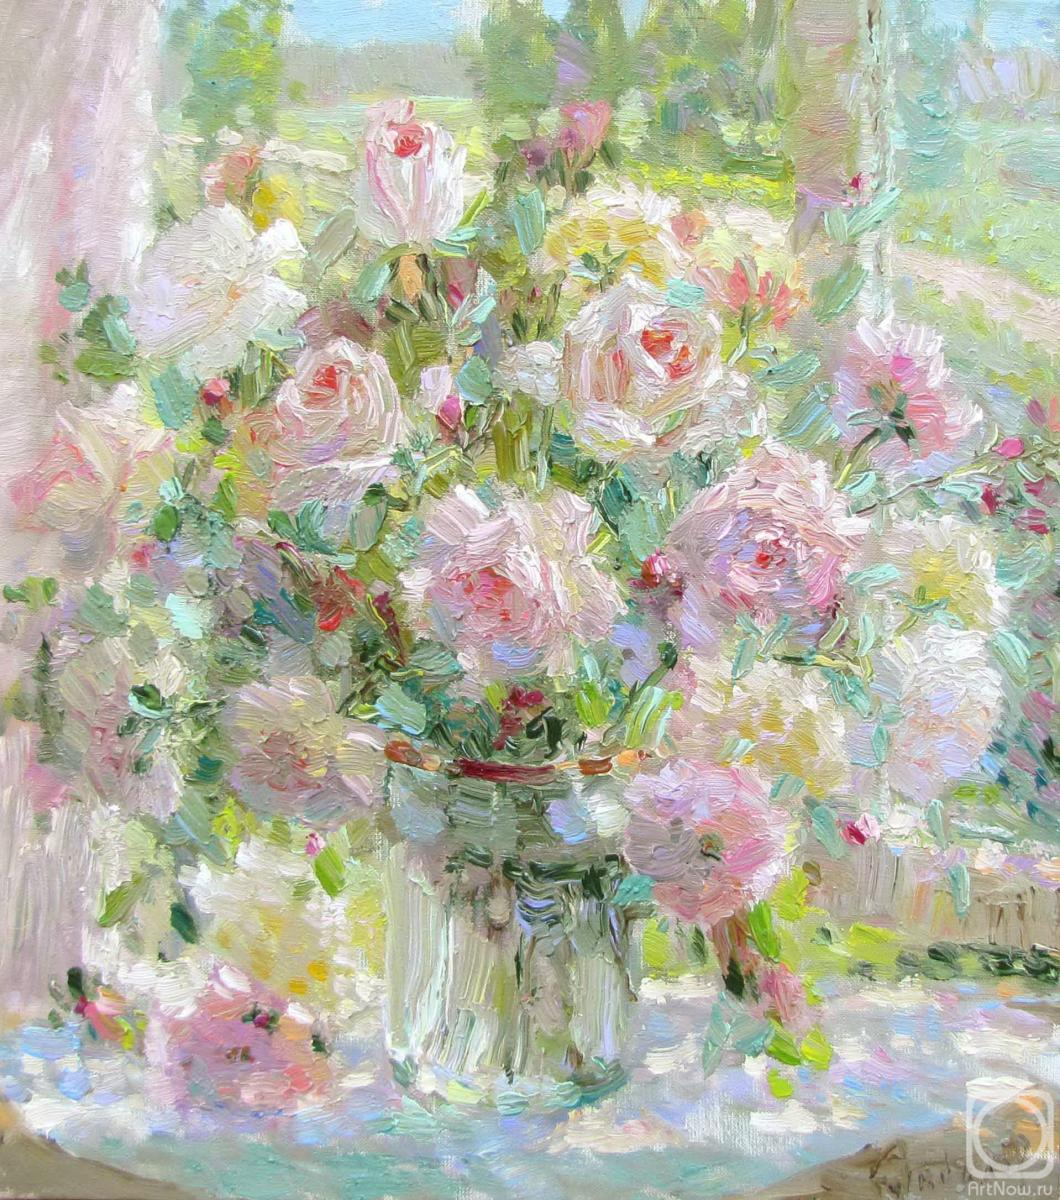 Zundalev Viktor. Sunny roses - bouquet of roses